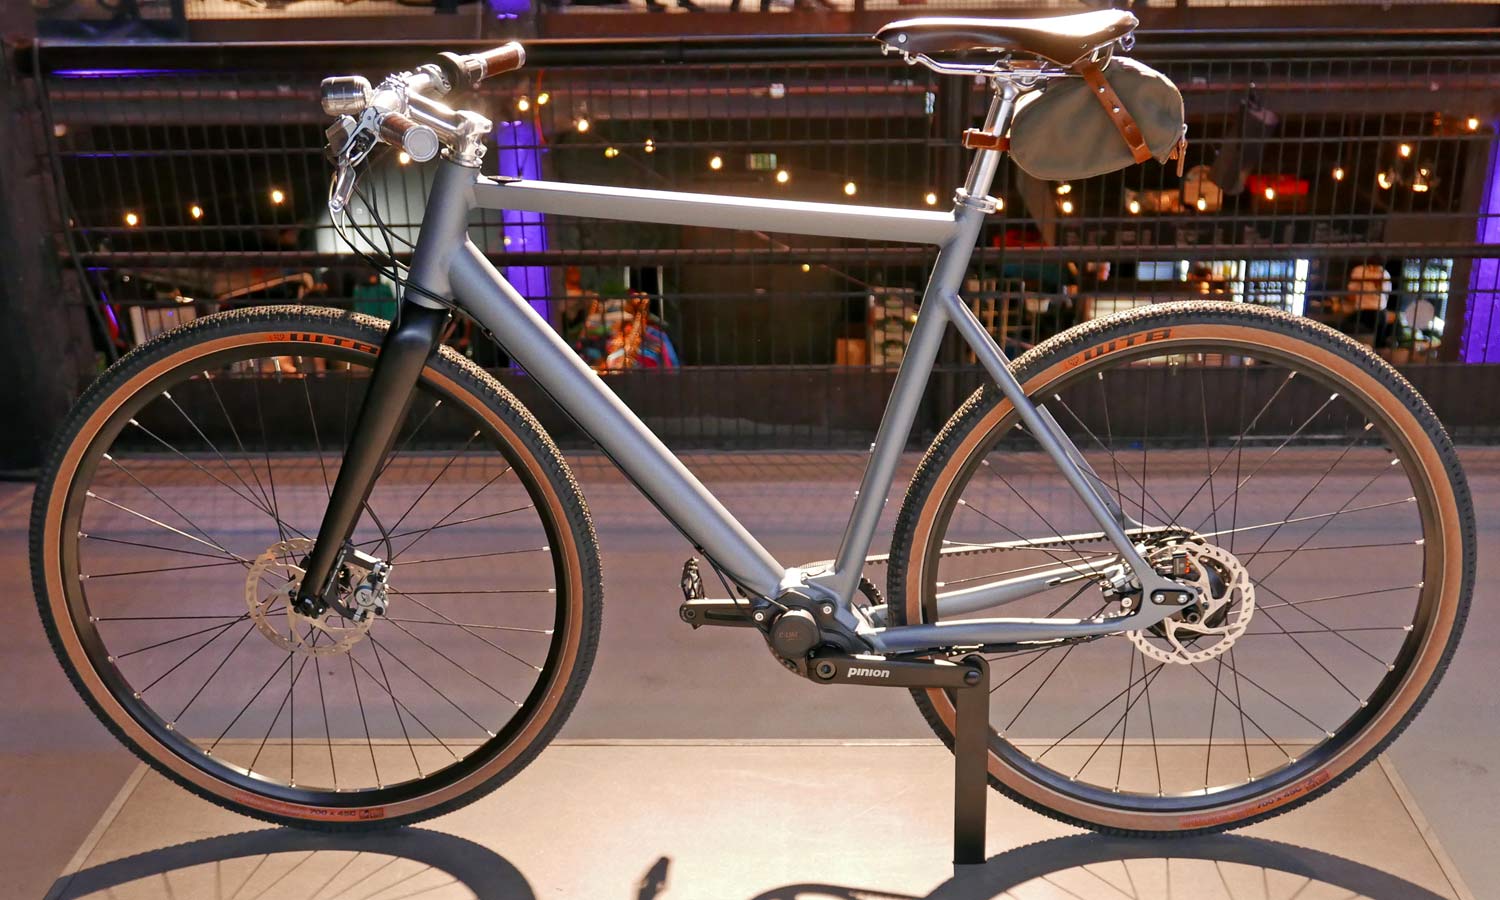 Desiknio Pinion Urban ebike, sleek urban commuter e-bike with integrated battery hub motor and gearbox